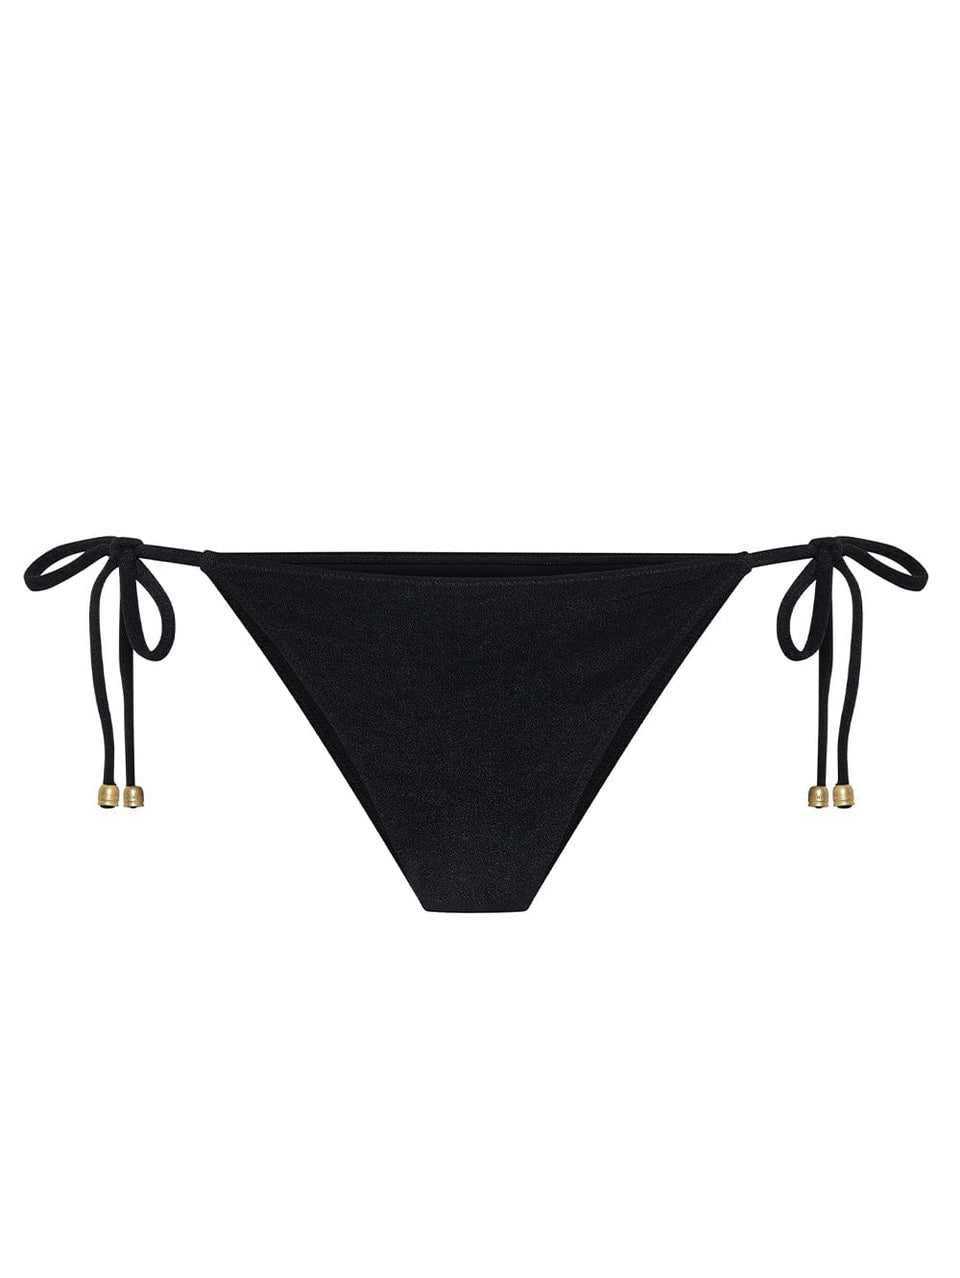 Charlotte Tie Side Bikini Bottom KIVARI | Black tie side bikini bottoms